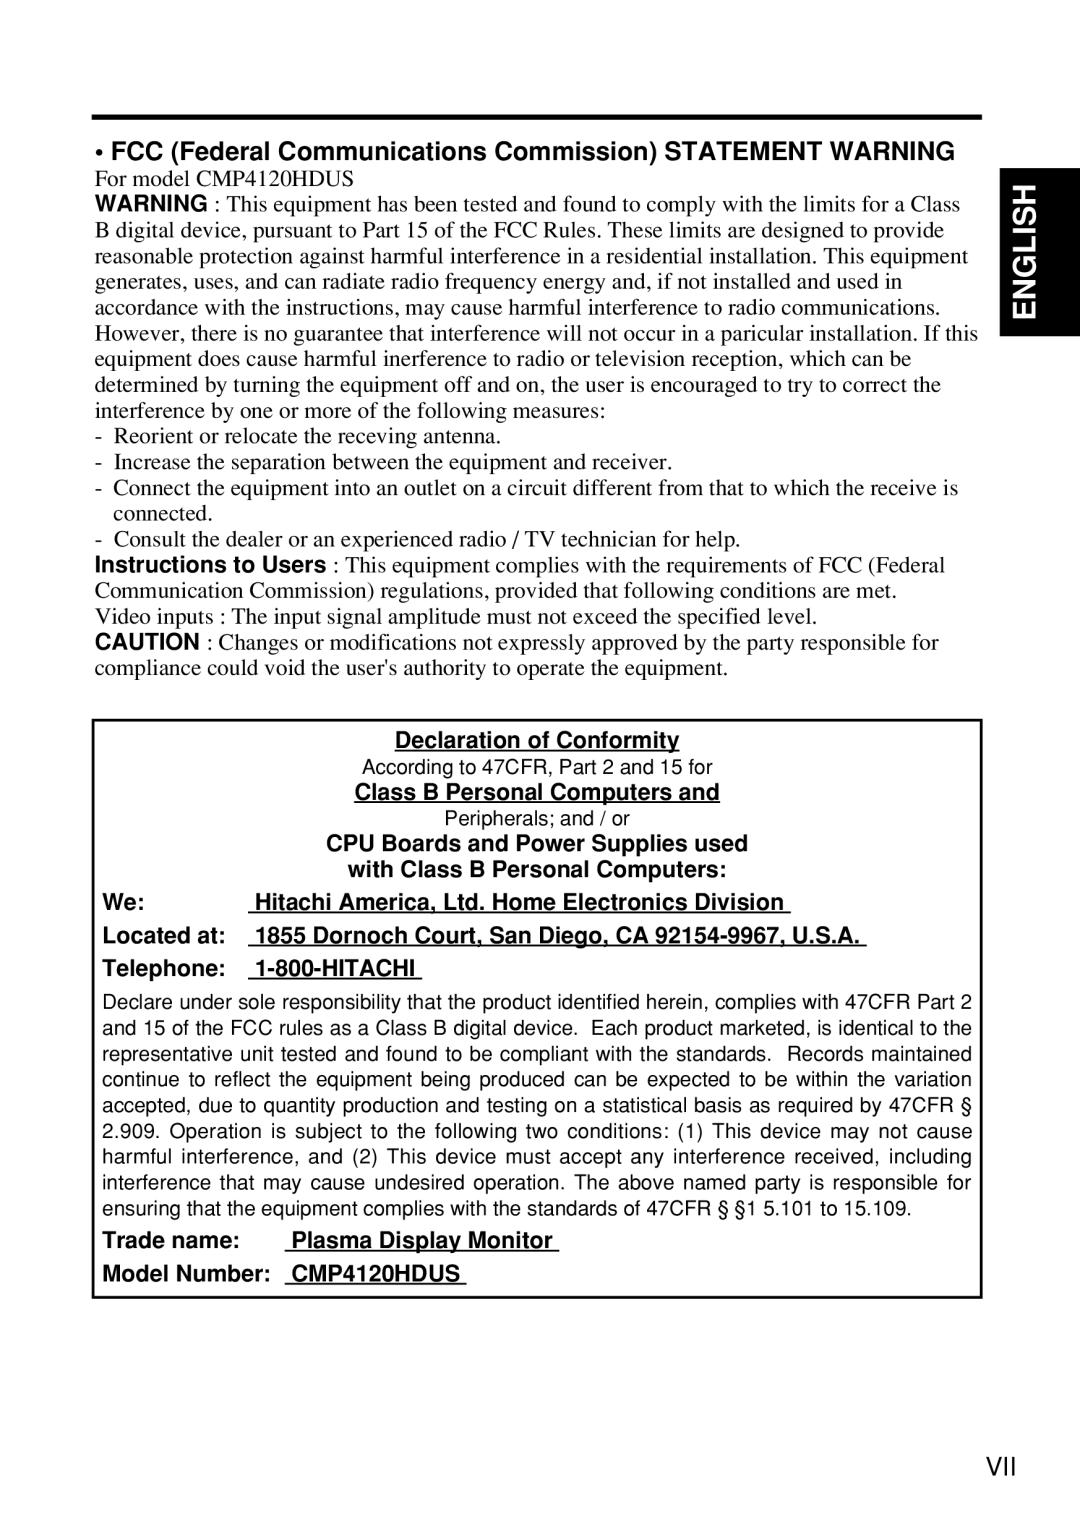 Hitachi Koki USA CMP4120HDUS user manual FCC Federal Communications Commission STATEMENT WARNING, English 